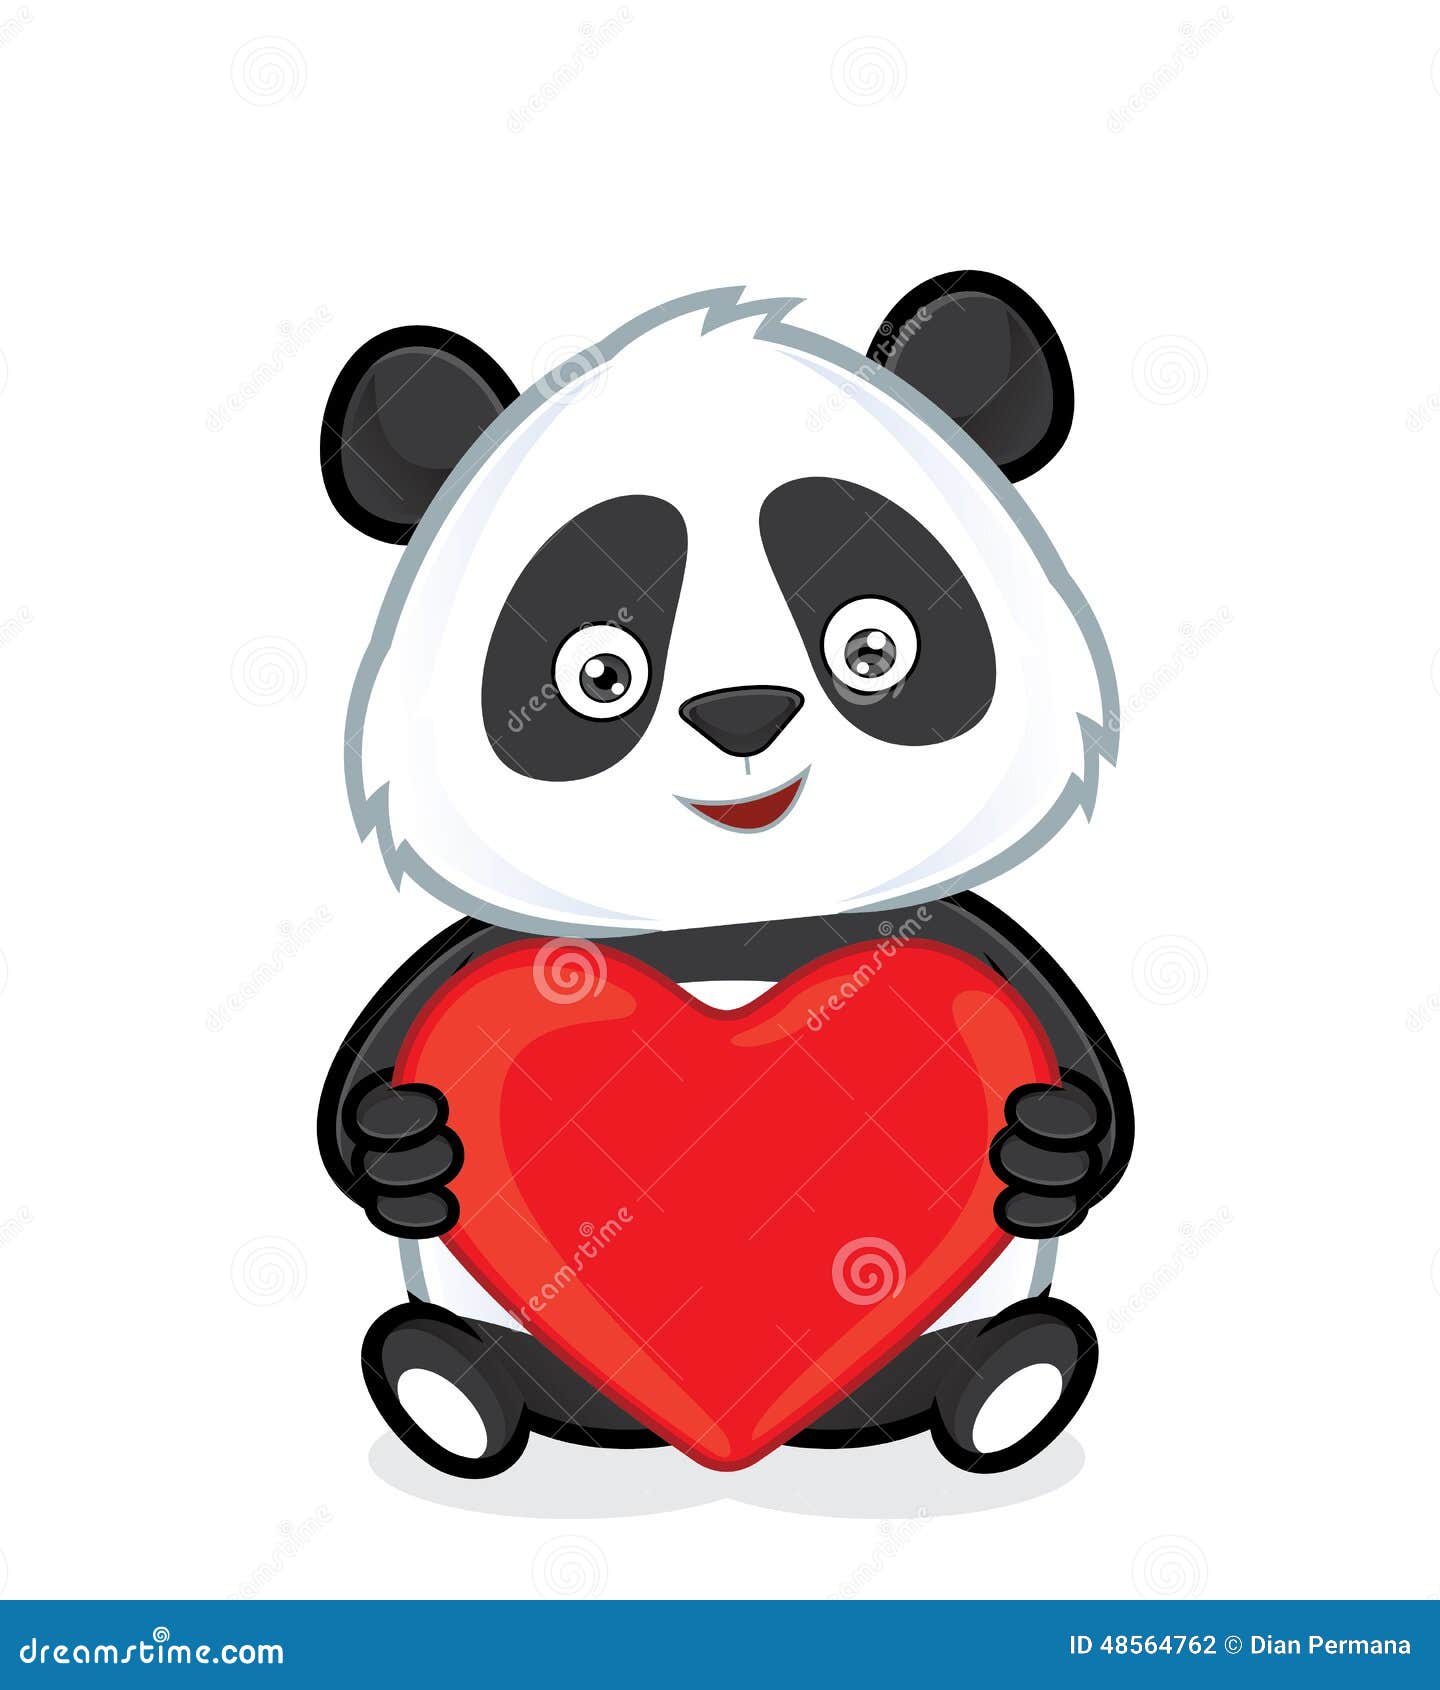 Panda holding heart love stock vector. Illustration of mammal - 48564762